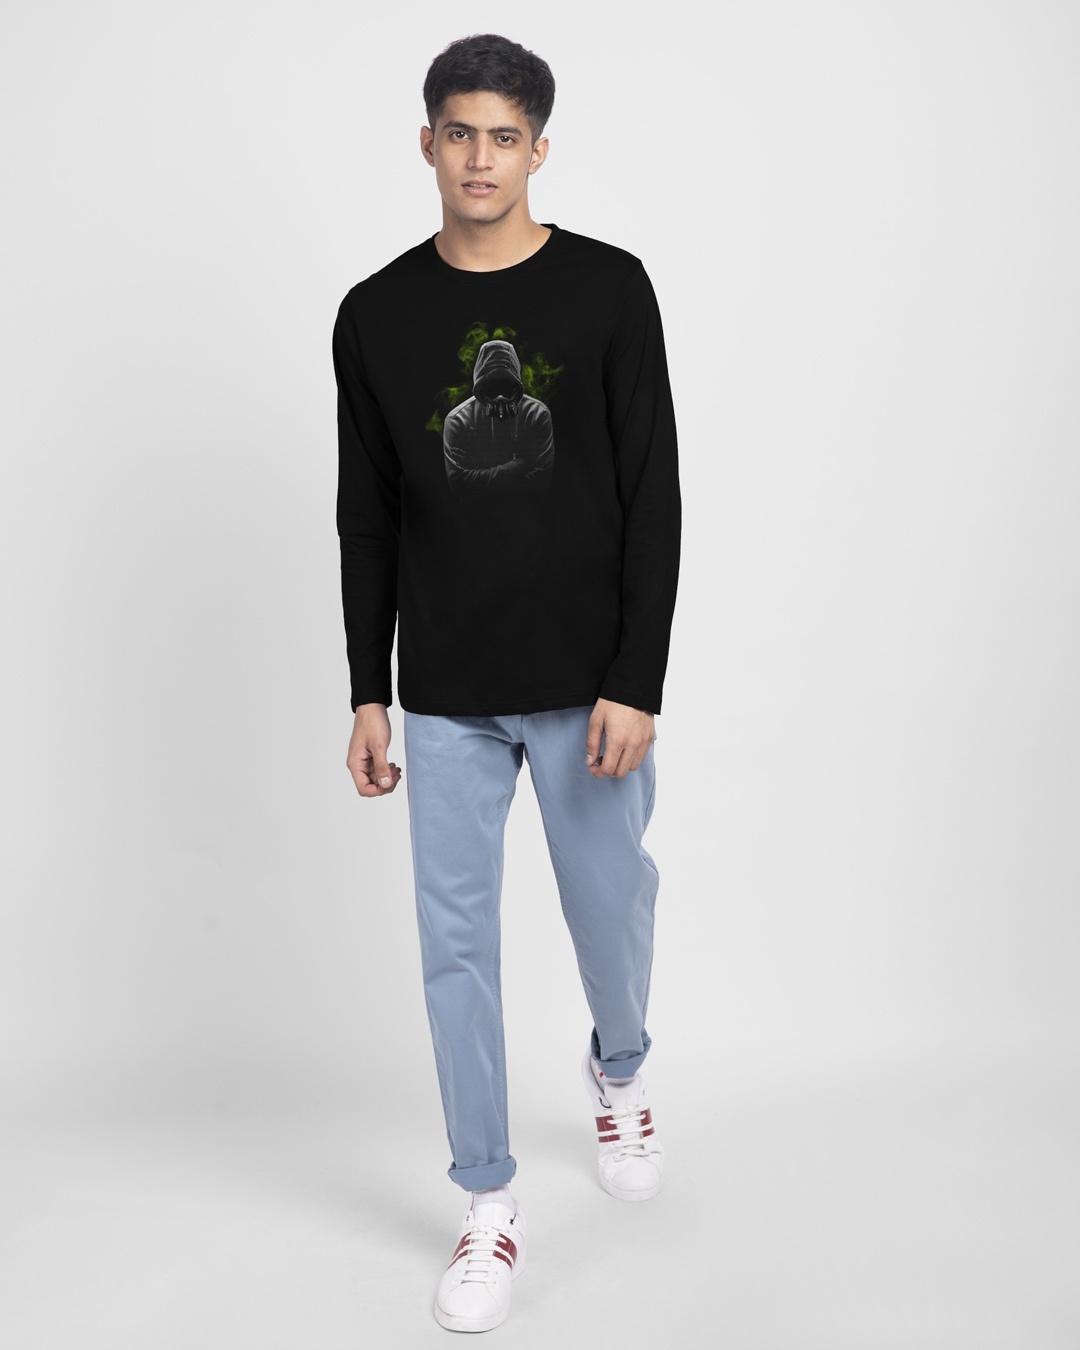 Shop Toxic Human Full Sleeve T-Shirt Black-Design